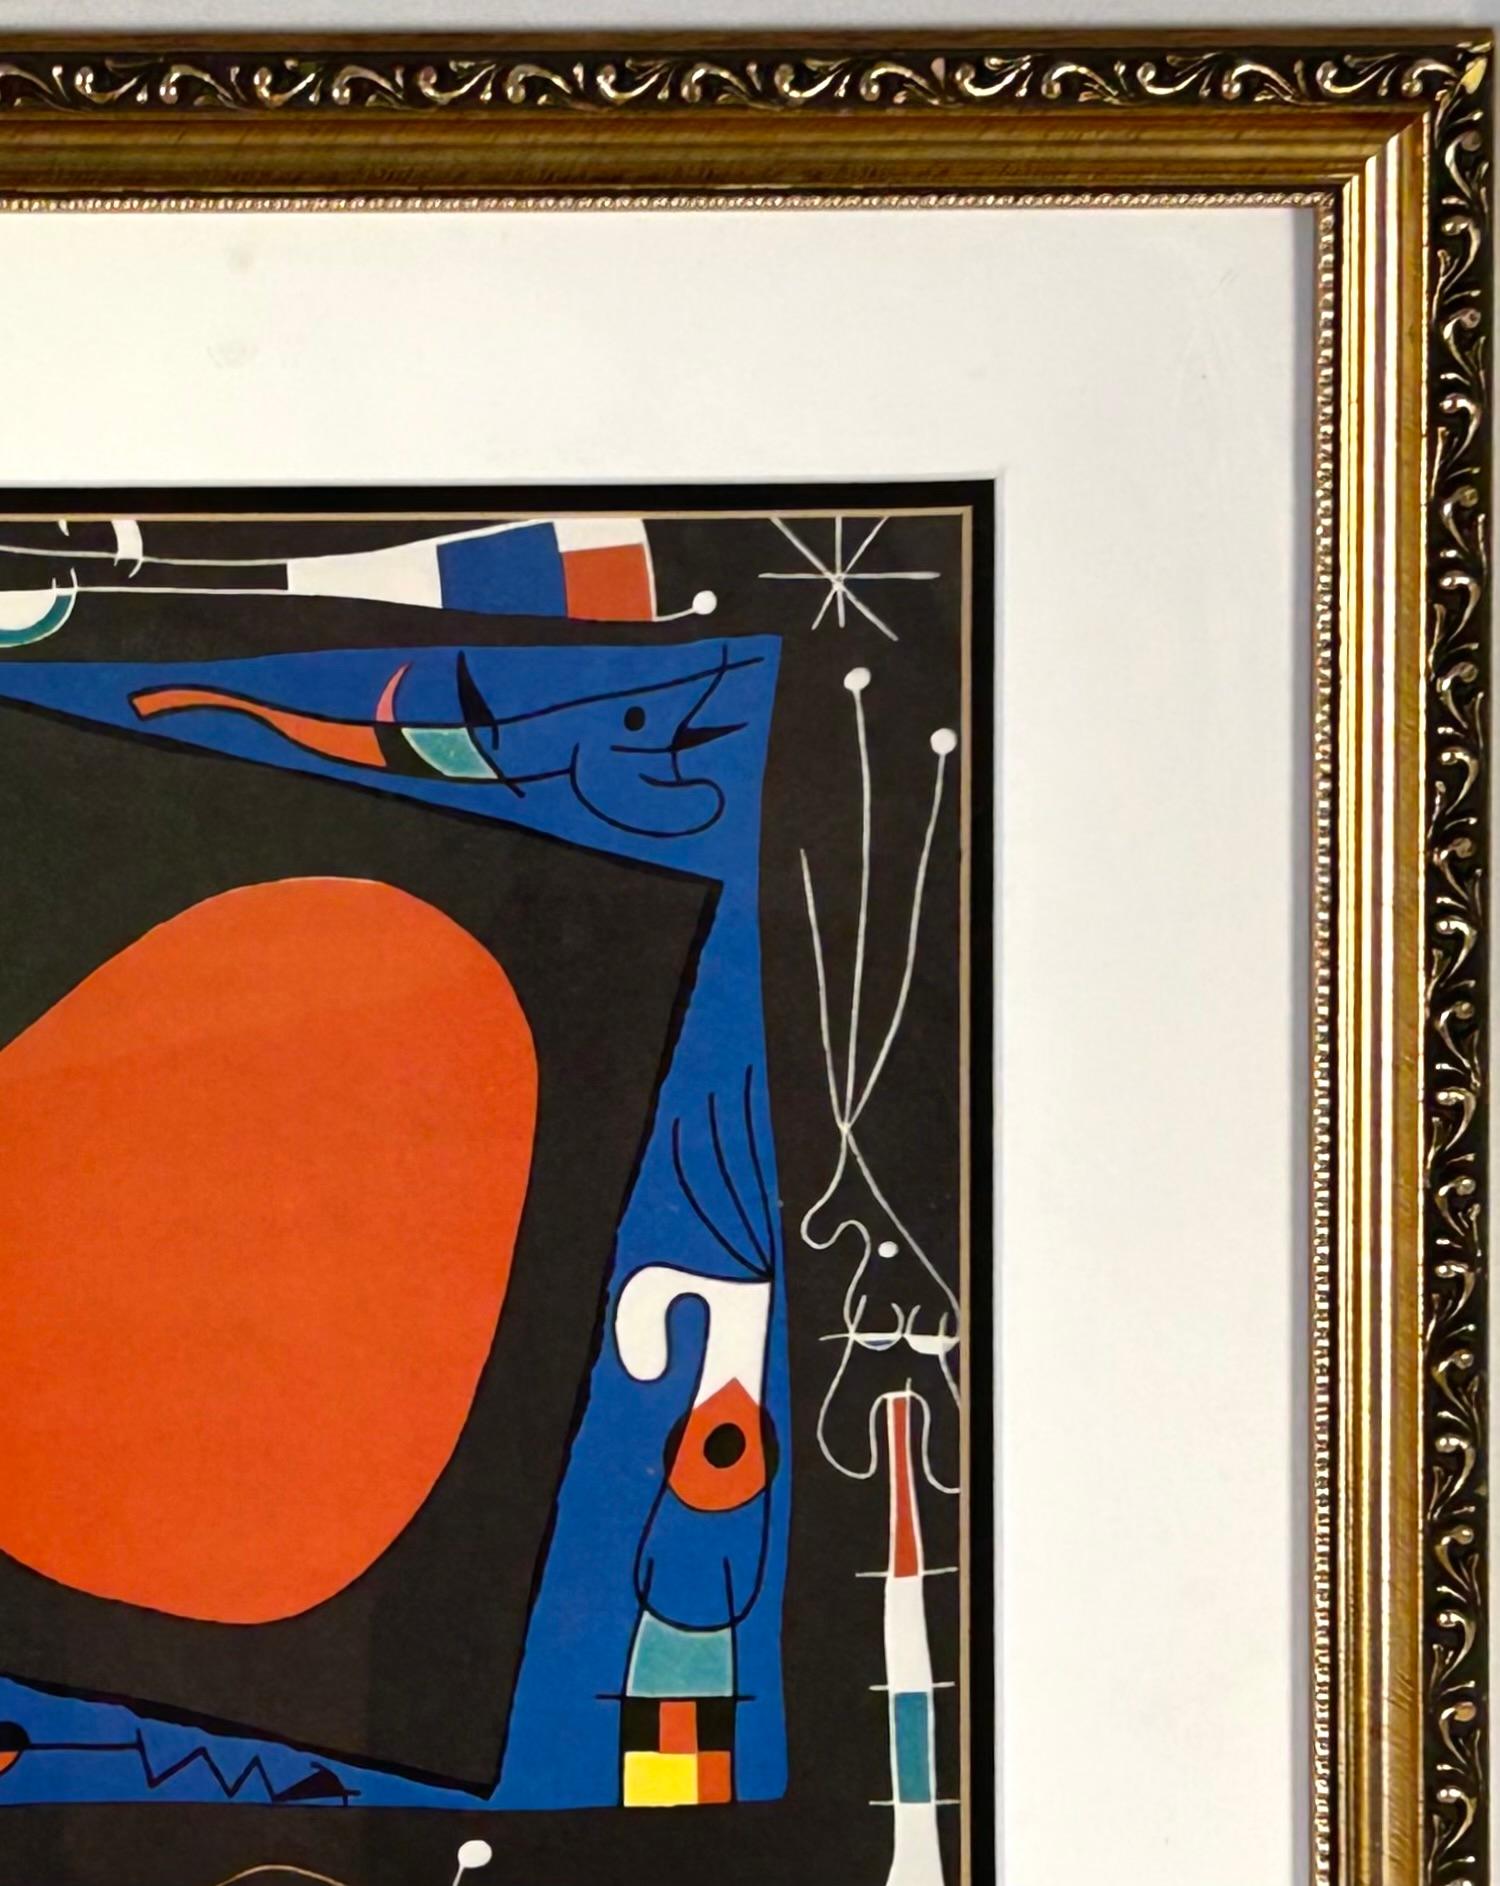 Spanish Joan Miró Lithograph, 